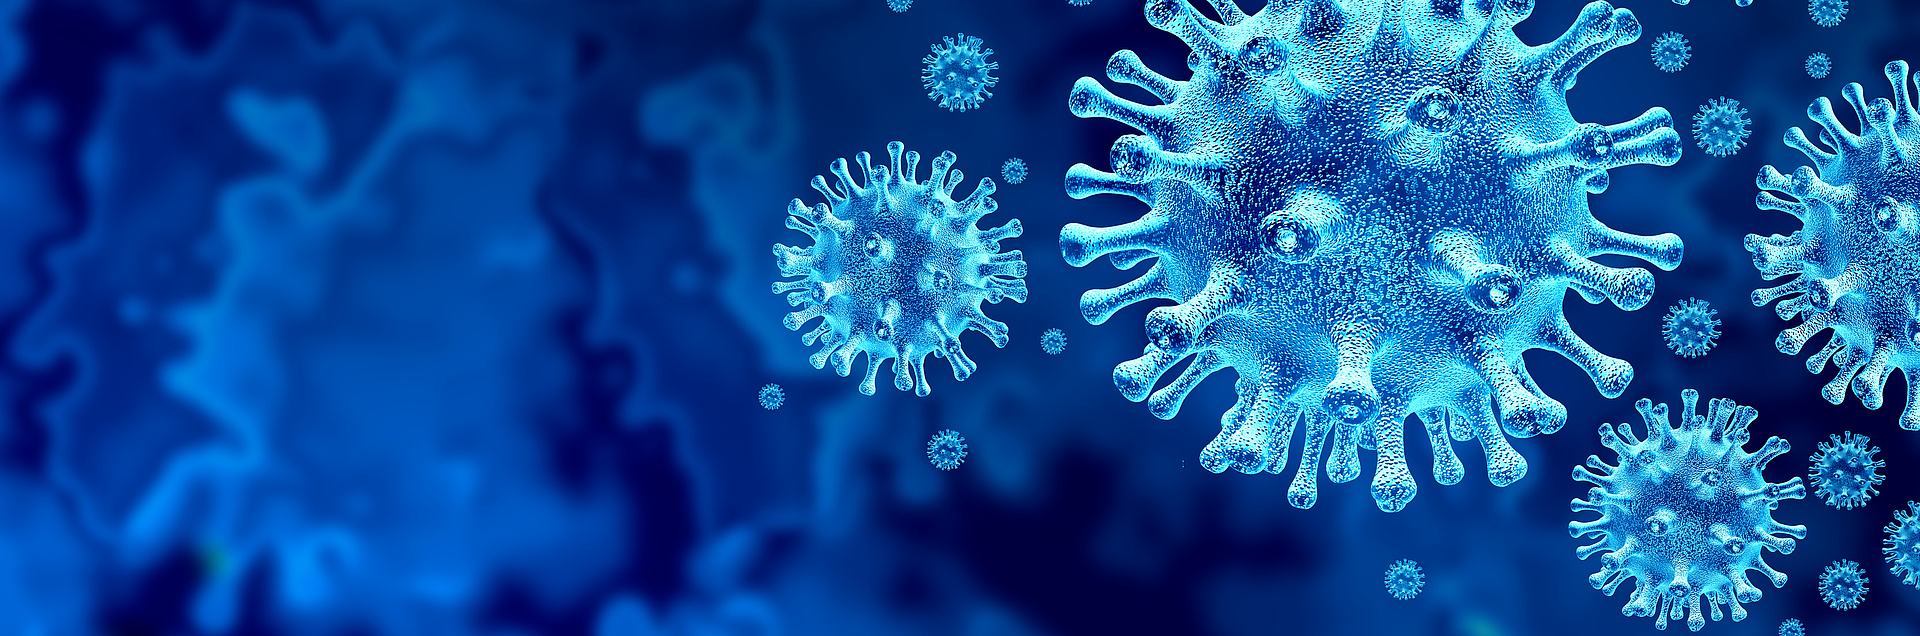 Corona: Coronaviren auf blauem Hintergrund